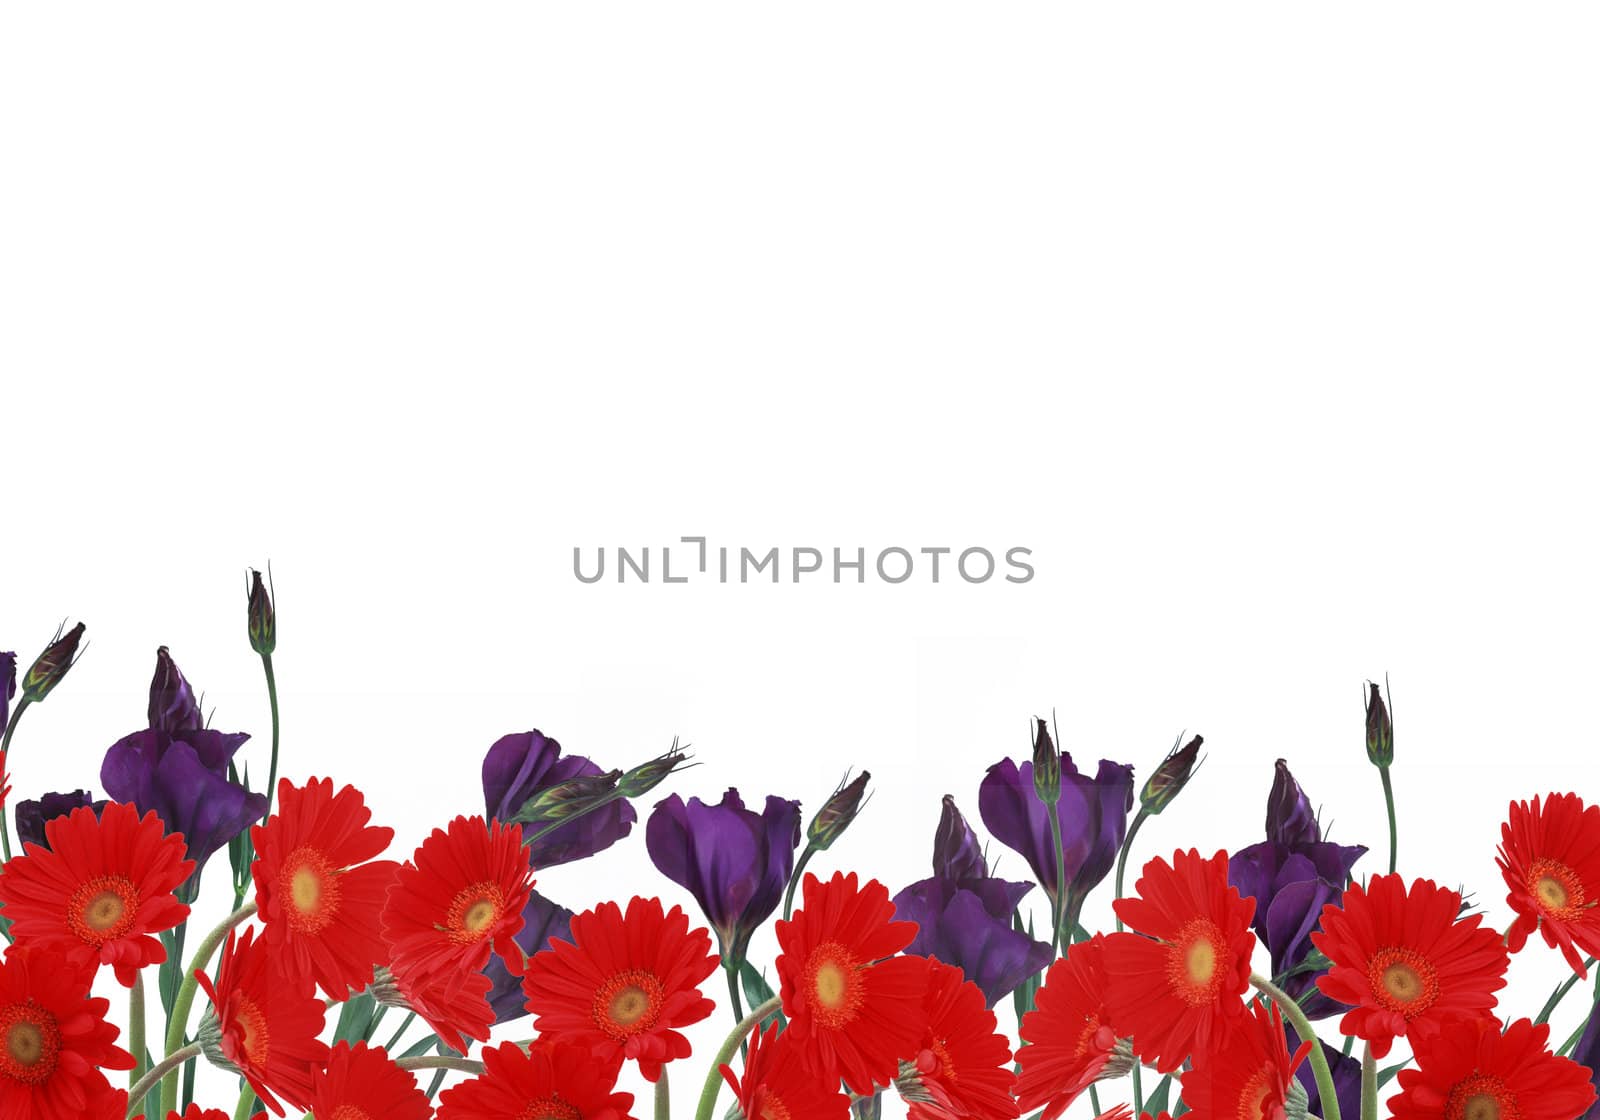 daisies and crocus by paddythegolfer